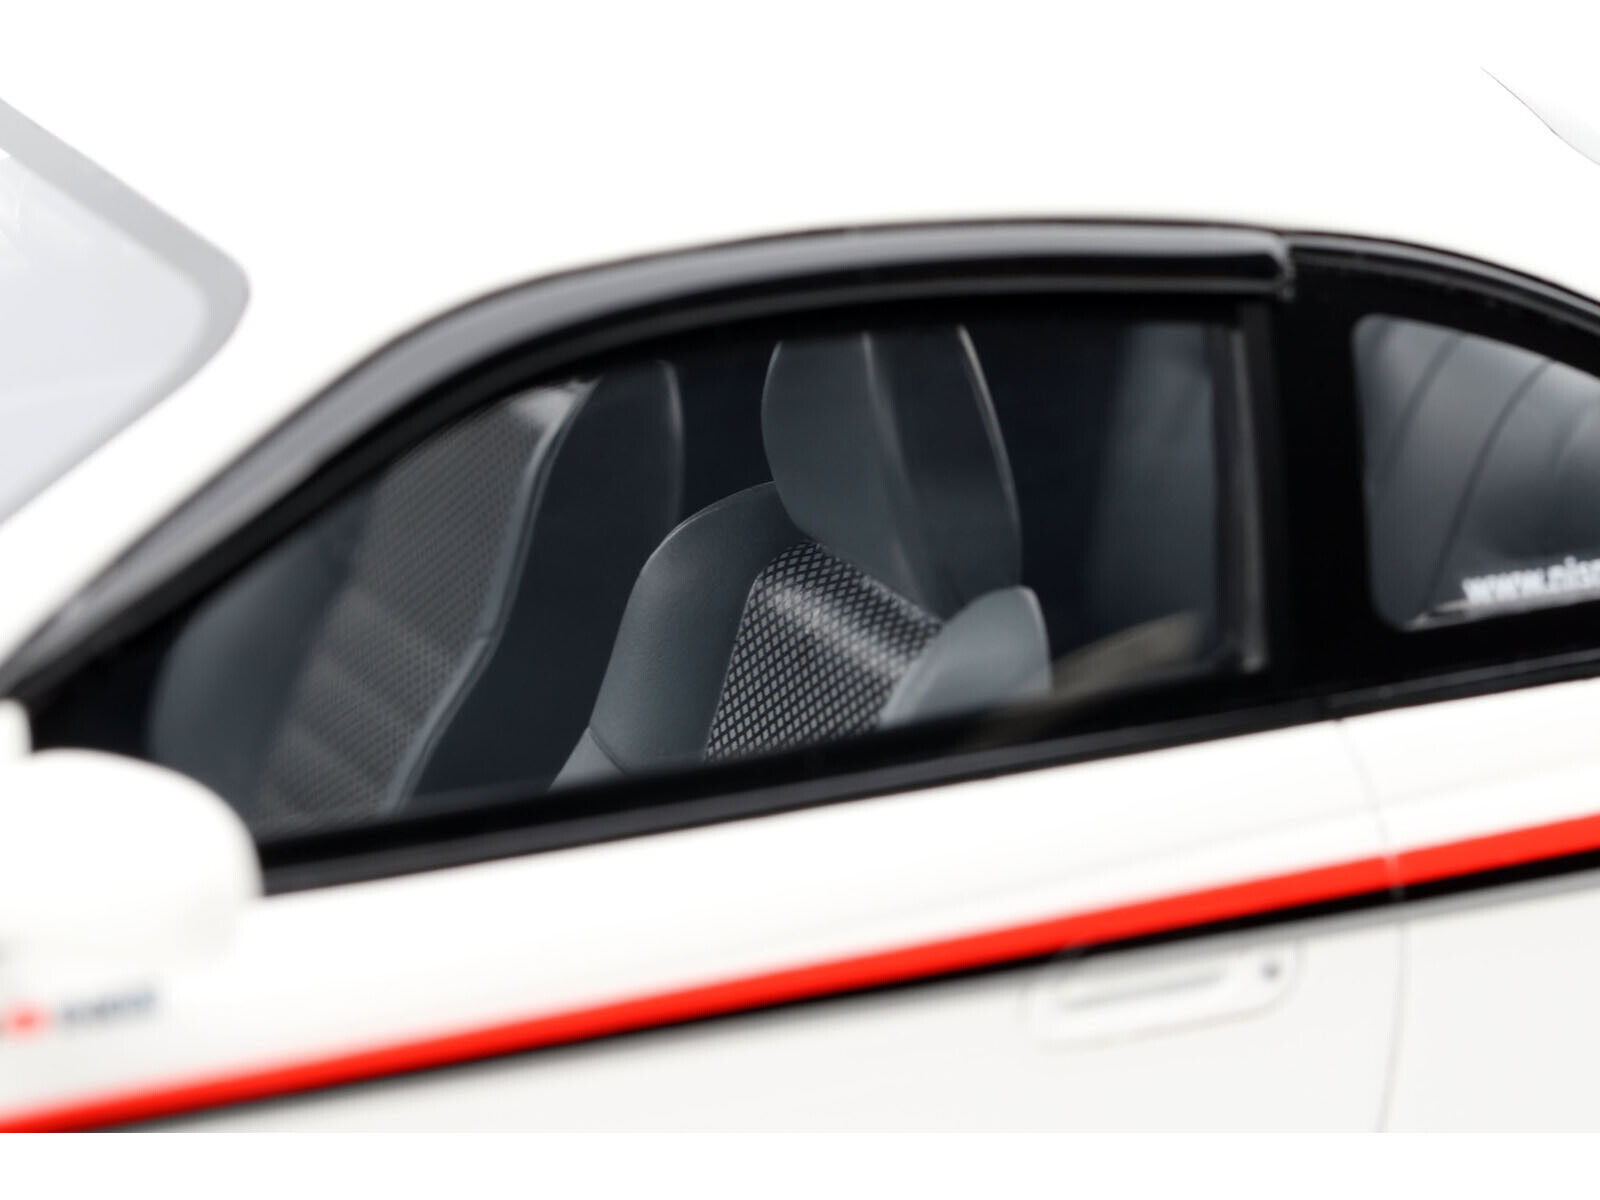 2000 Nissan Silvia (S15) NISMO S-Tune RHD (Right Hand Drive) White with Stripes